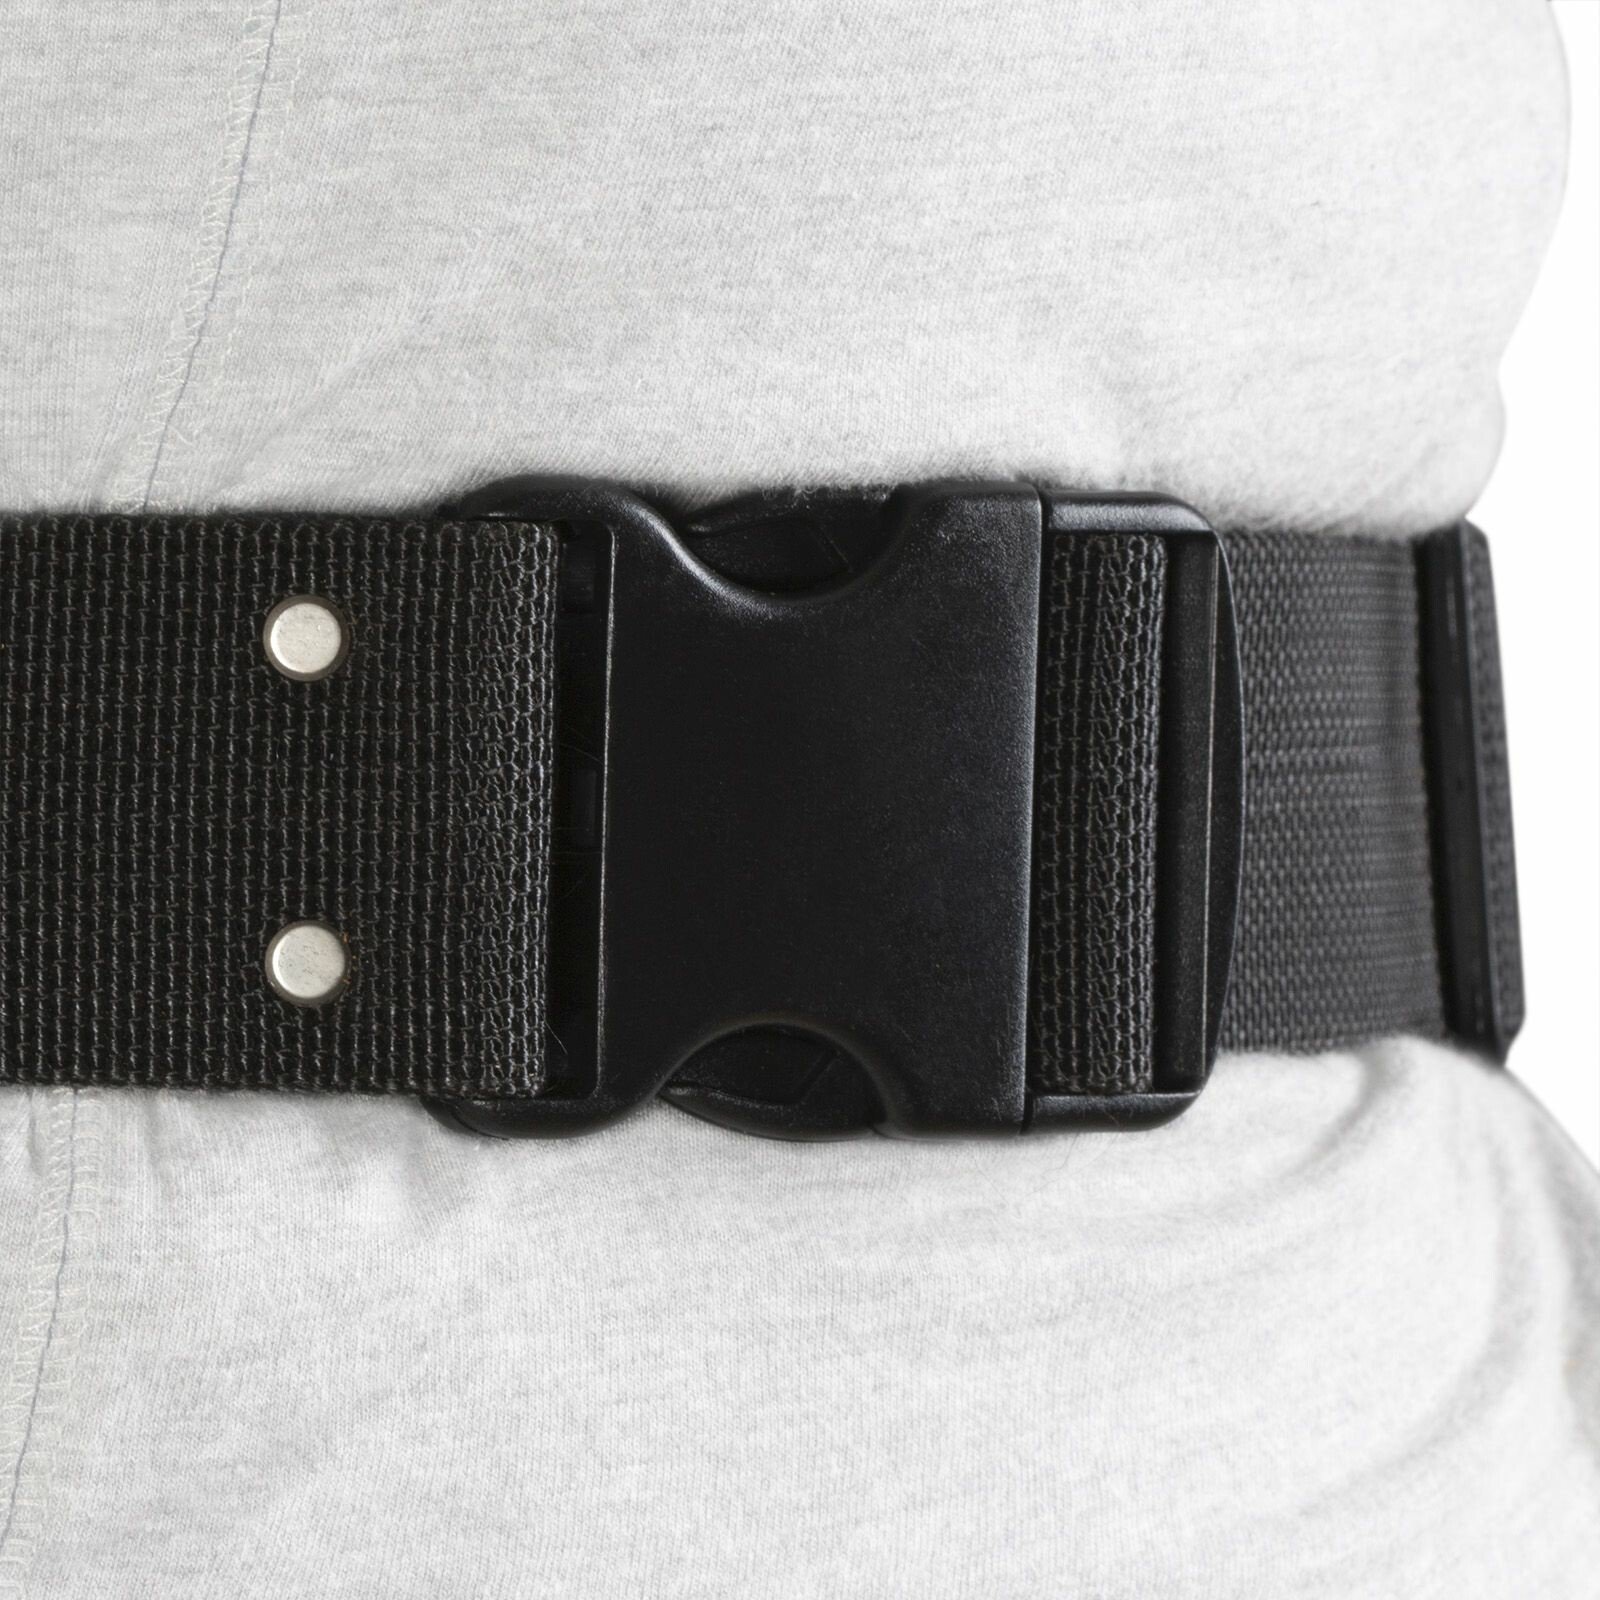 Professional leather tool carrier belt - 9 pockets + hammer holder thumb